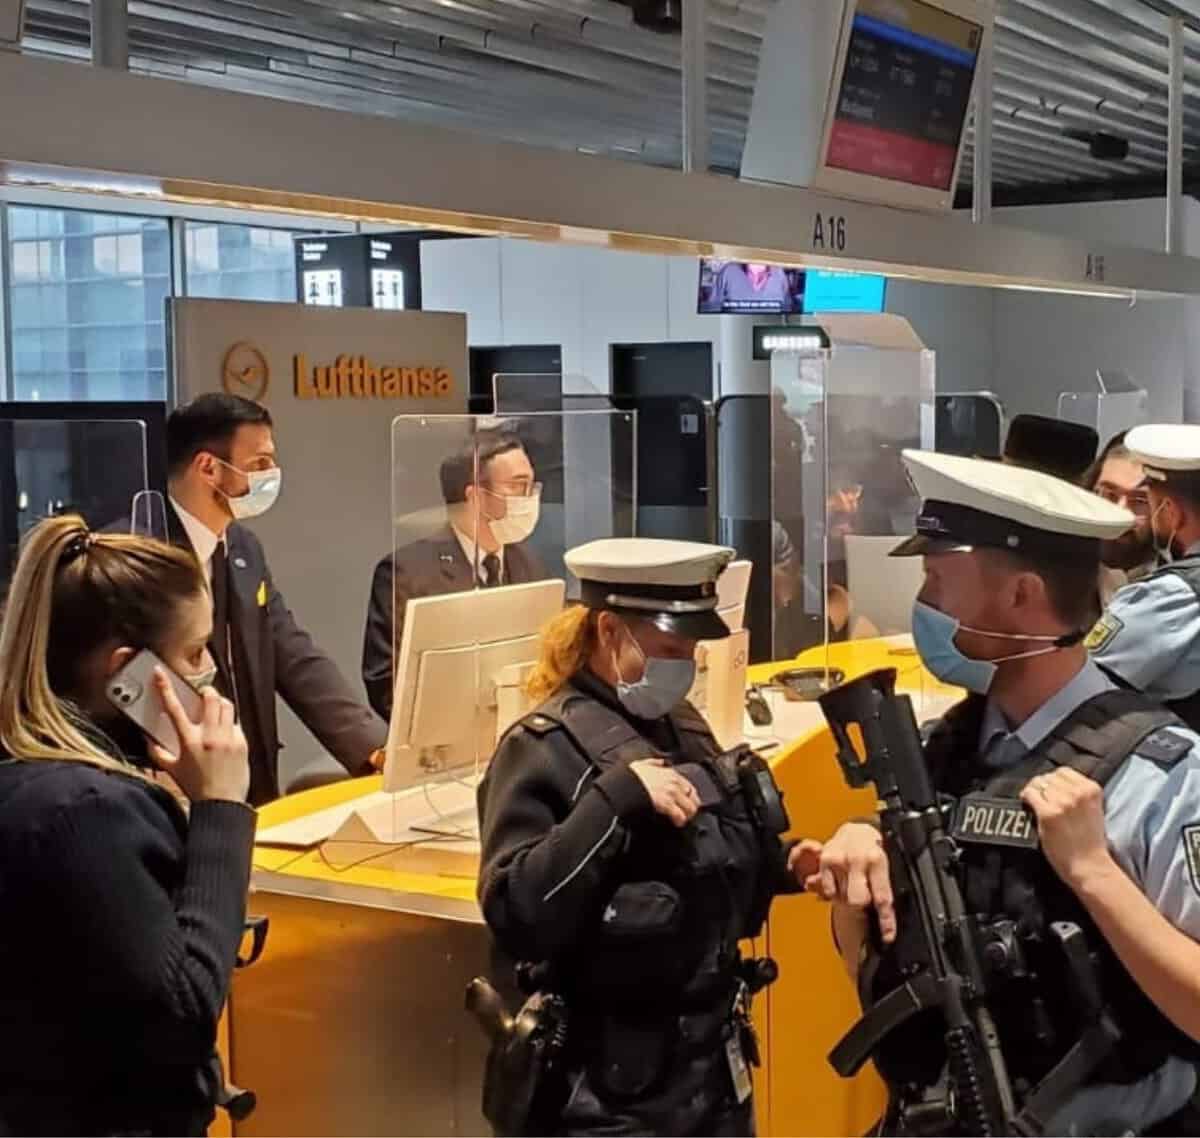 Jewish passengers accuse Lufthansa of being antisemitic